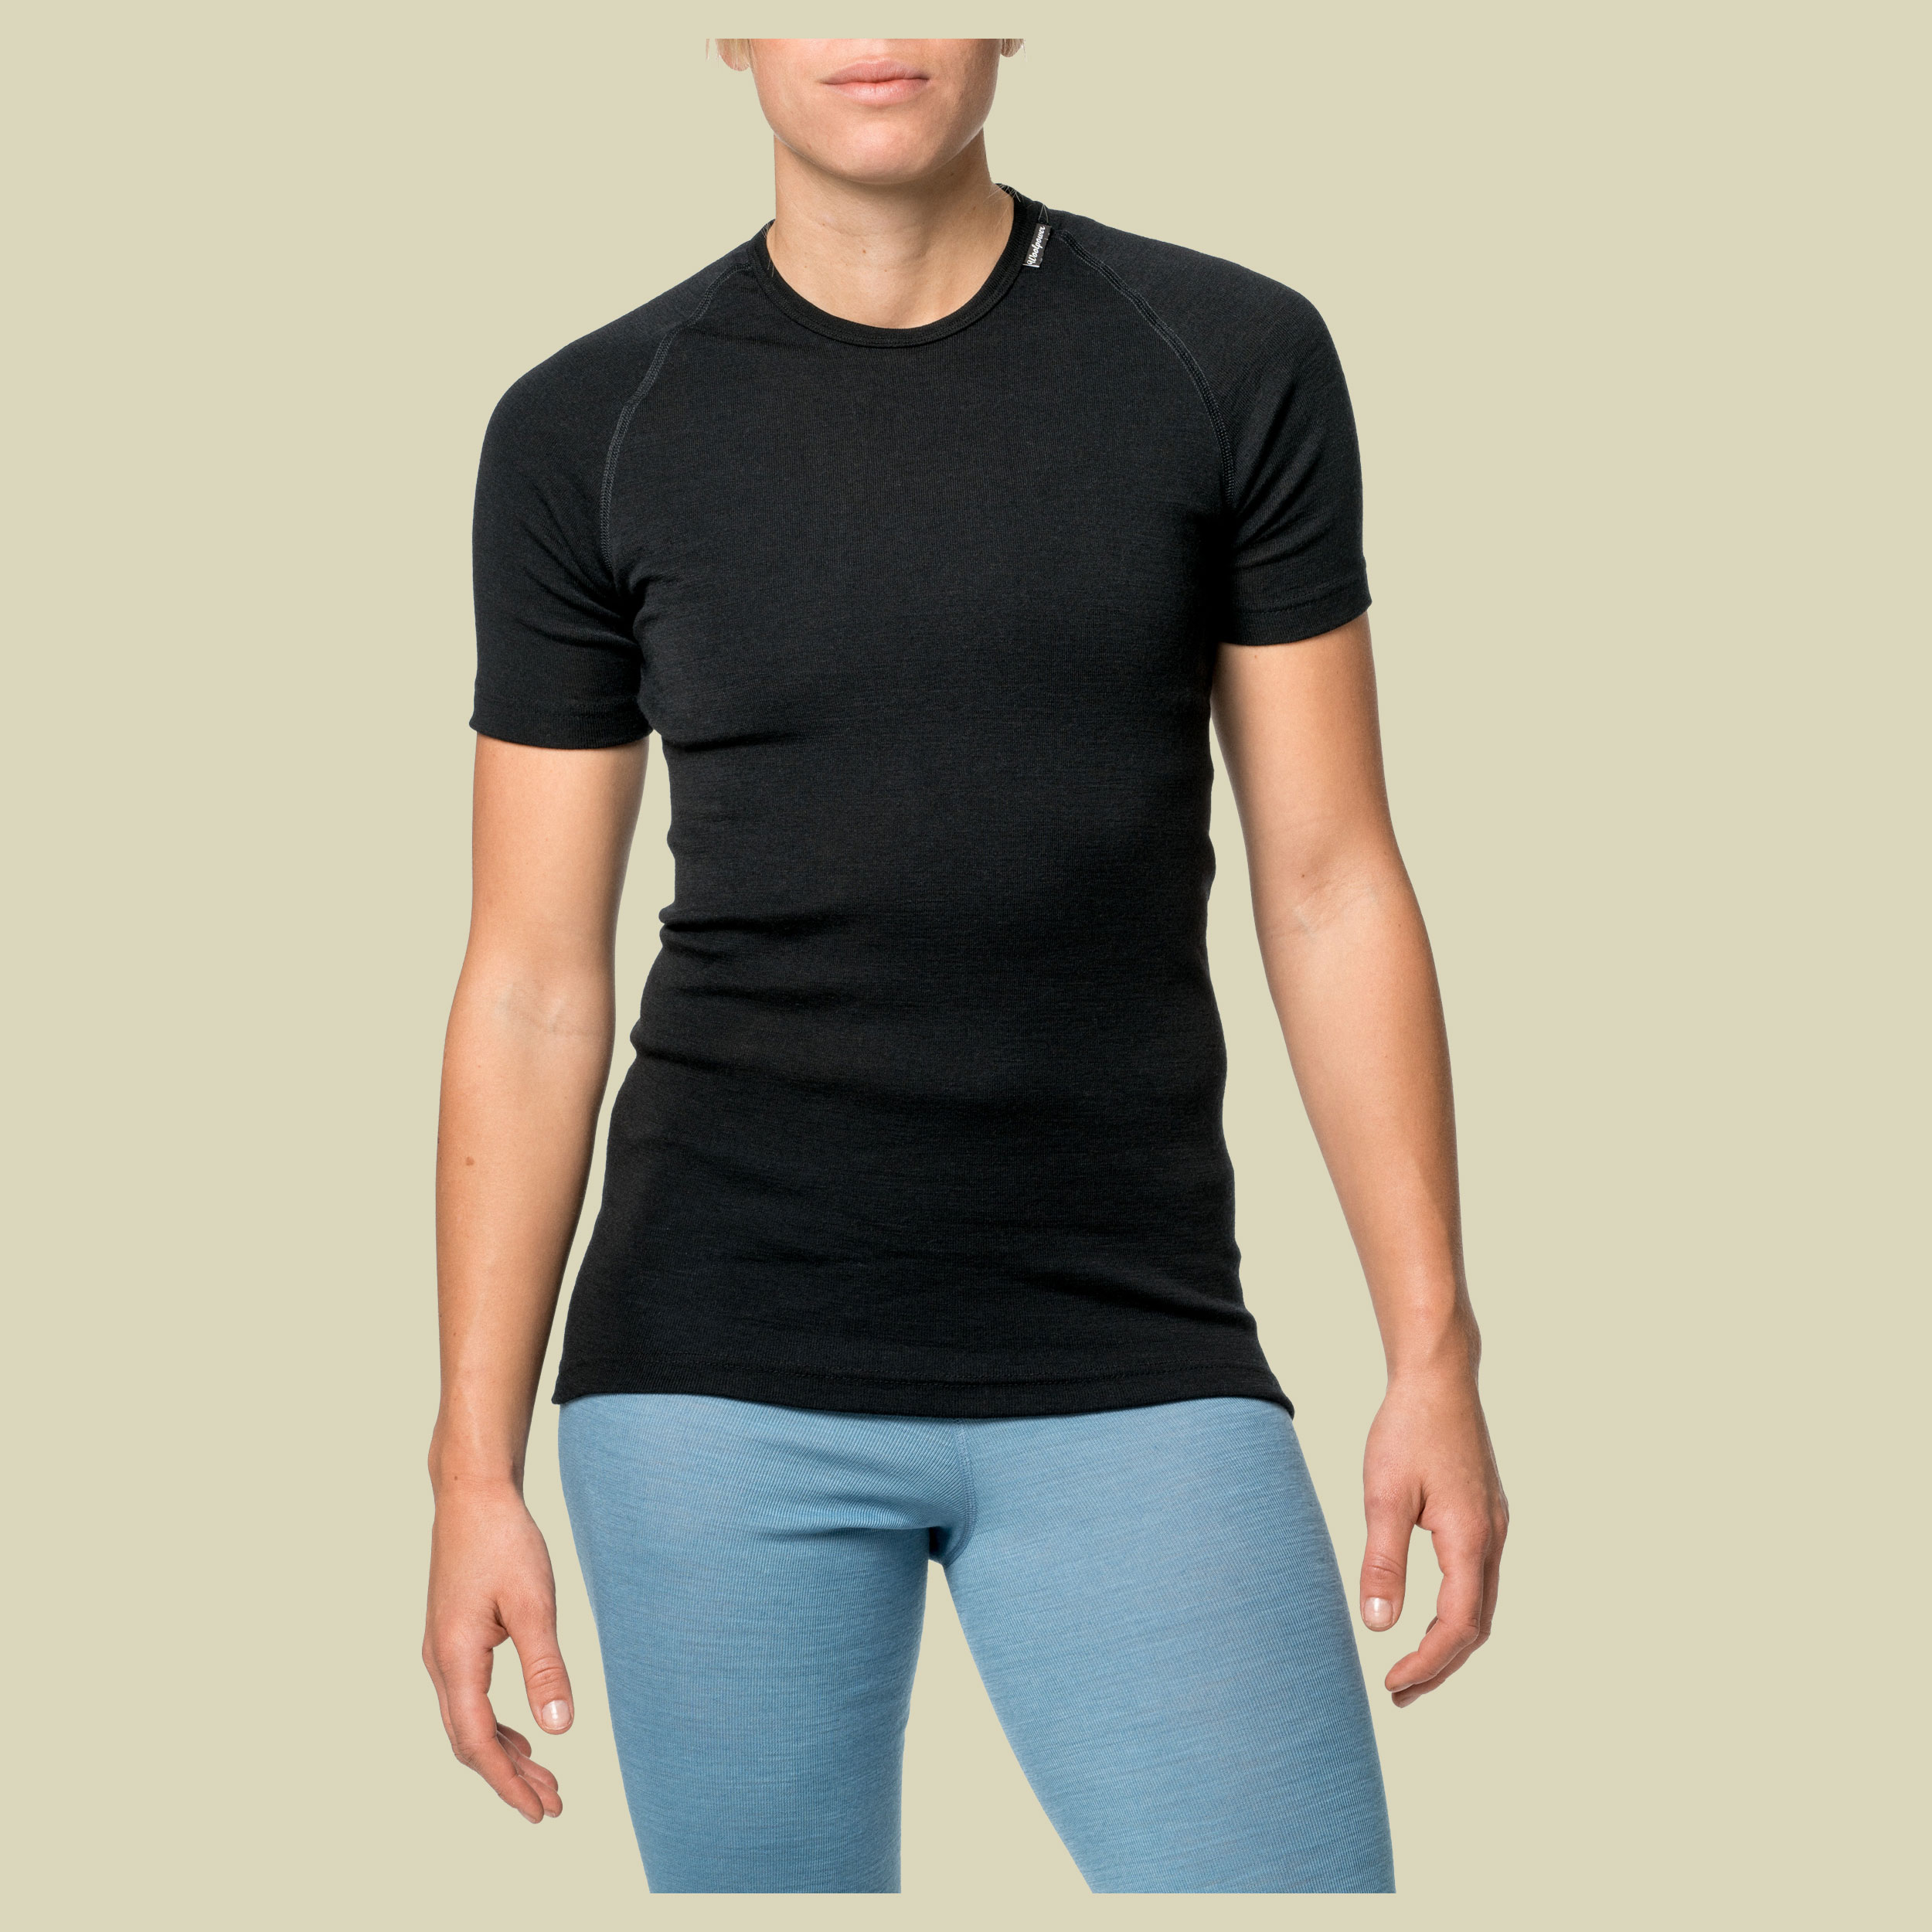 Lite T-Shirt S schwarz - Farbe black